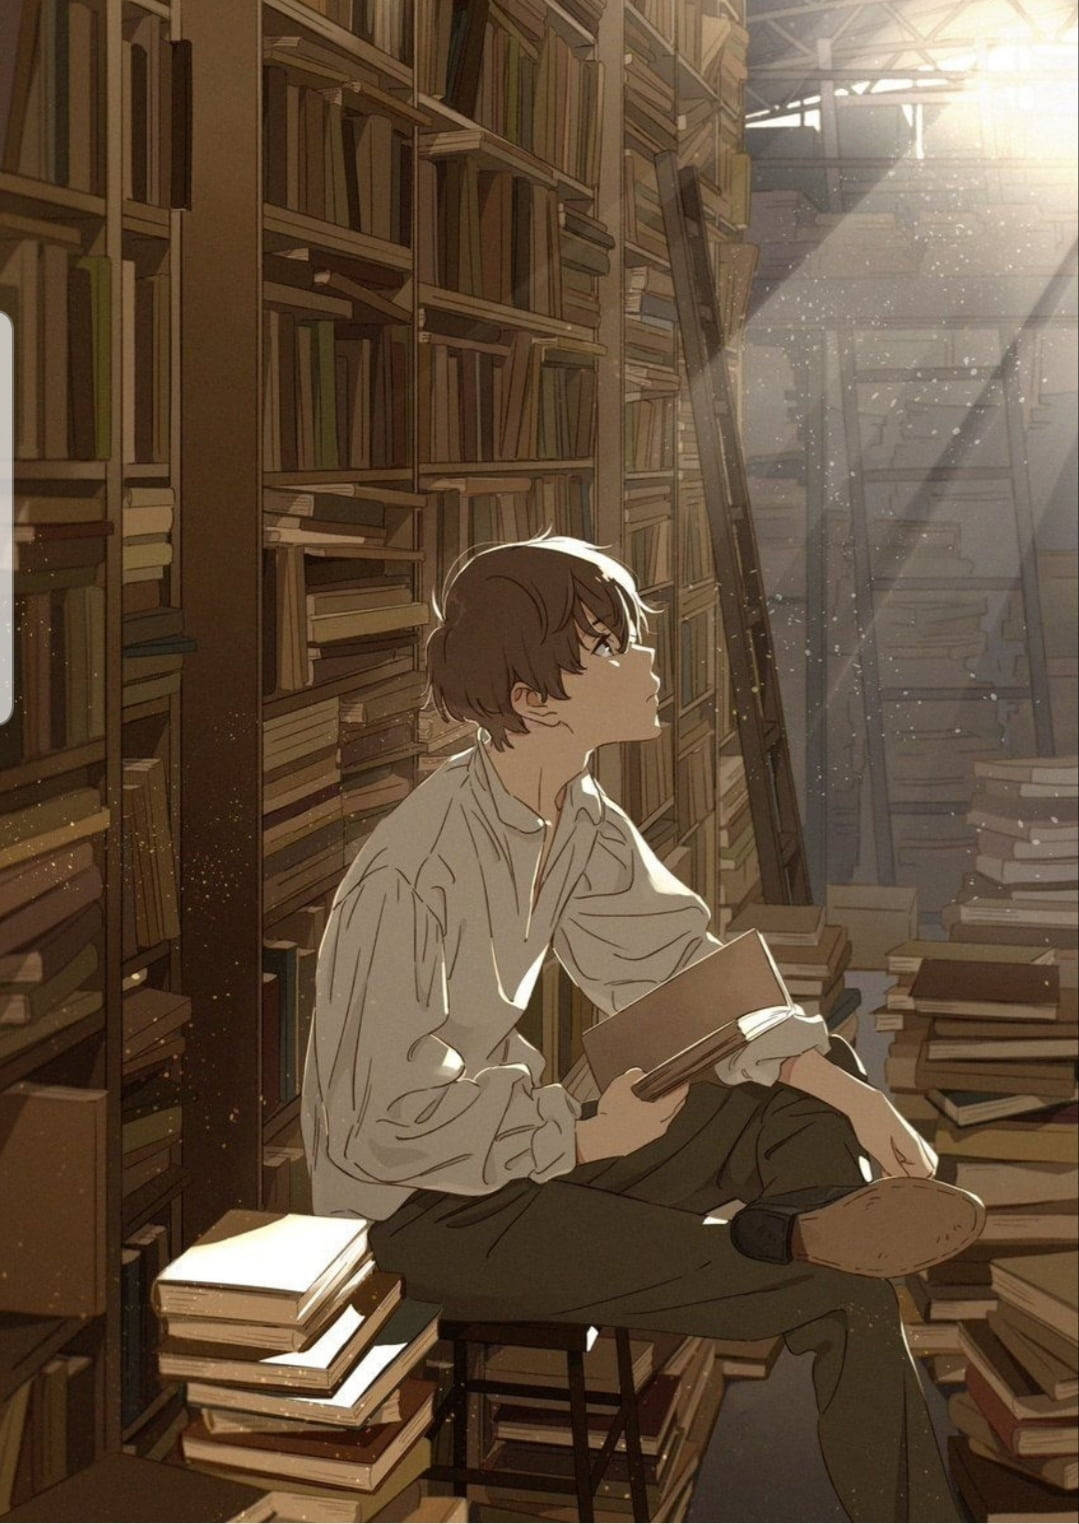 Anime Boy On A Dump Of Books Wallpaper